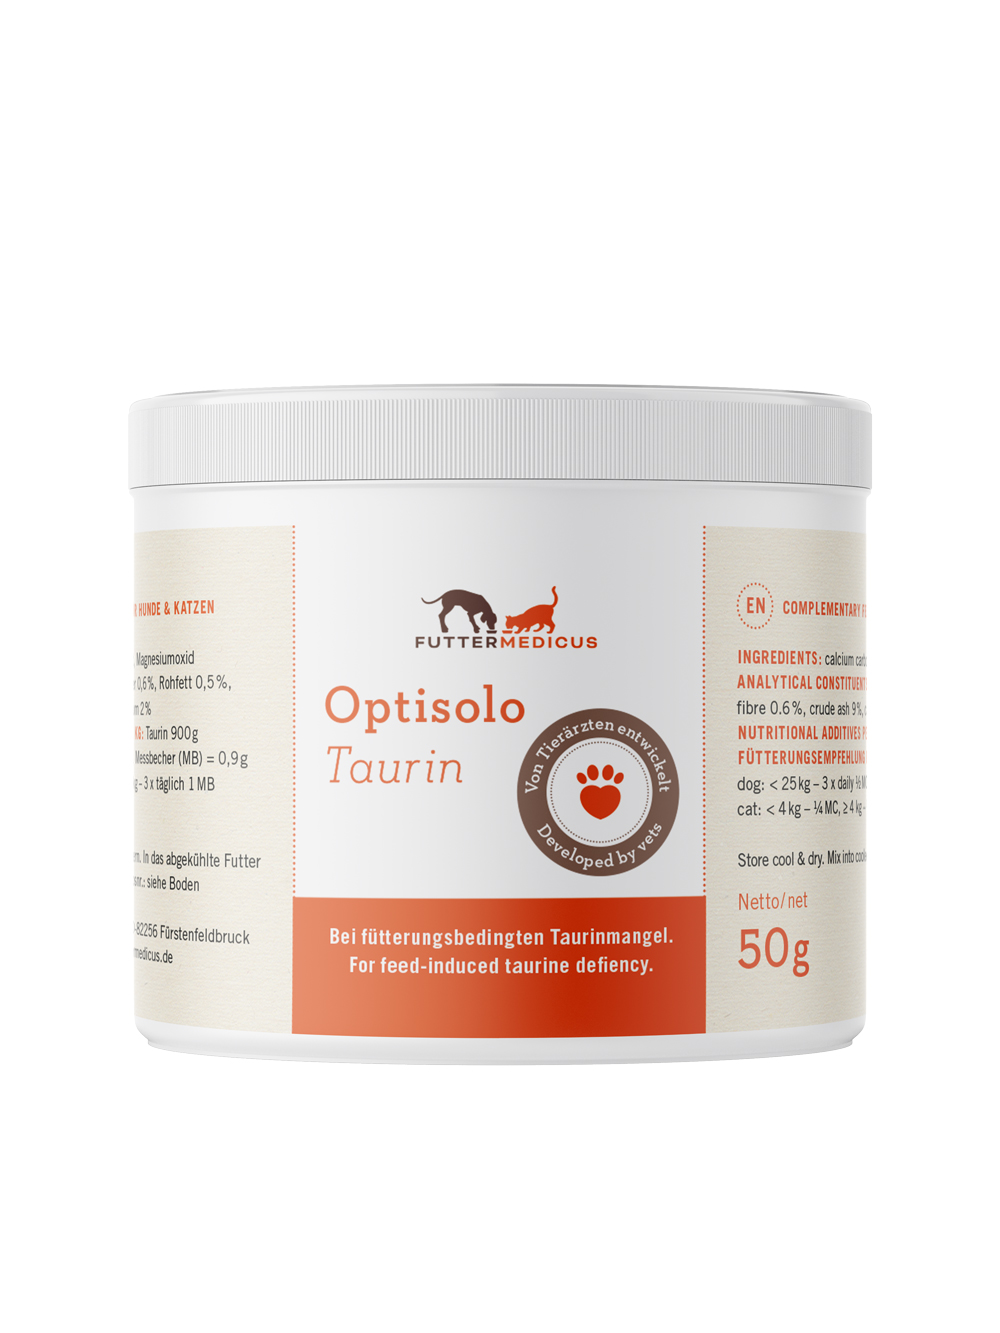 Optisolo-Taurin 50g / Futtermedicus